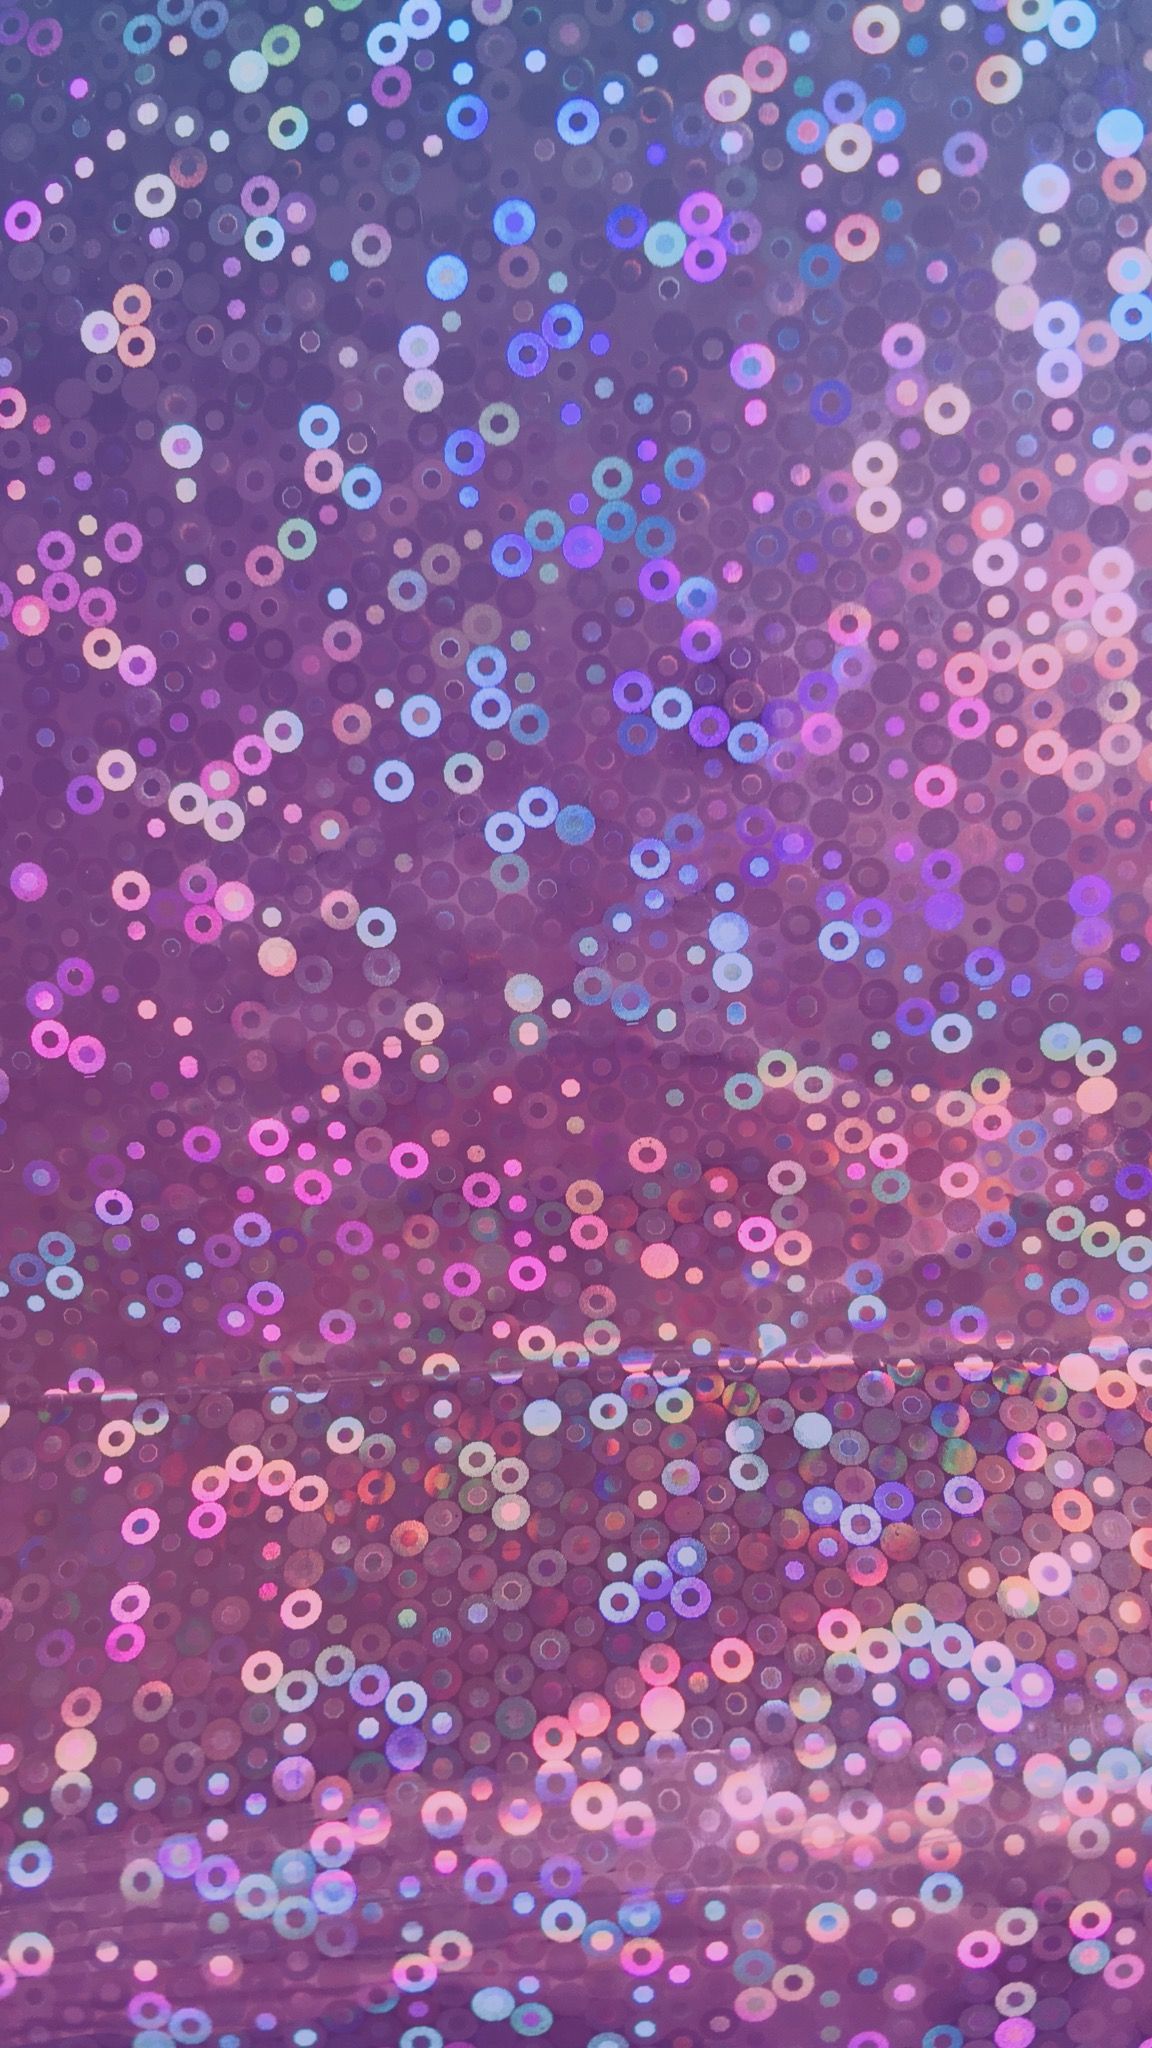 Iphone 8 Wallpaper Sparkle - HD Wallpaper 